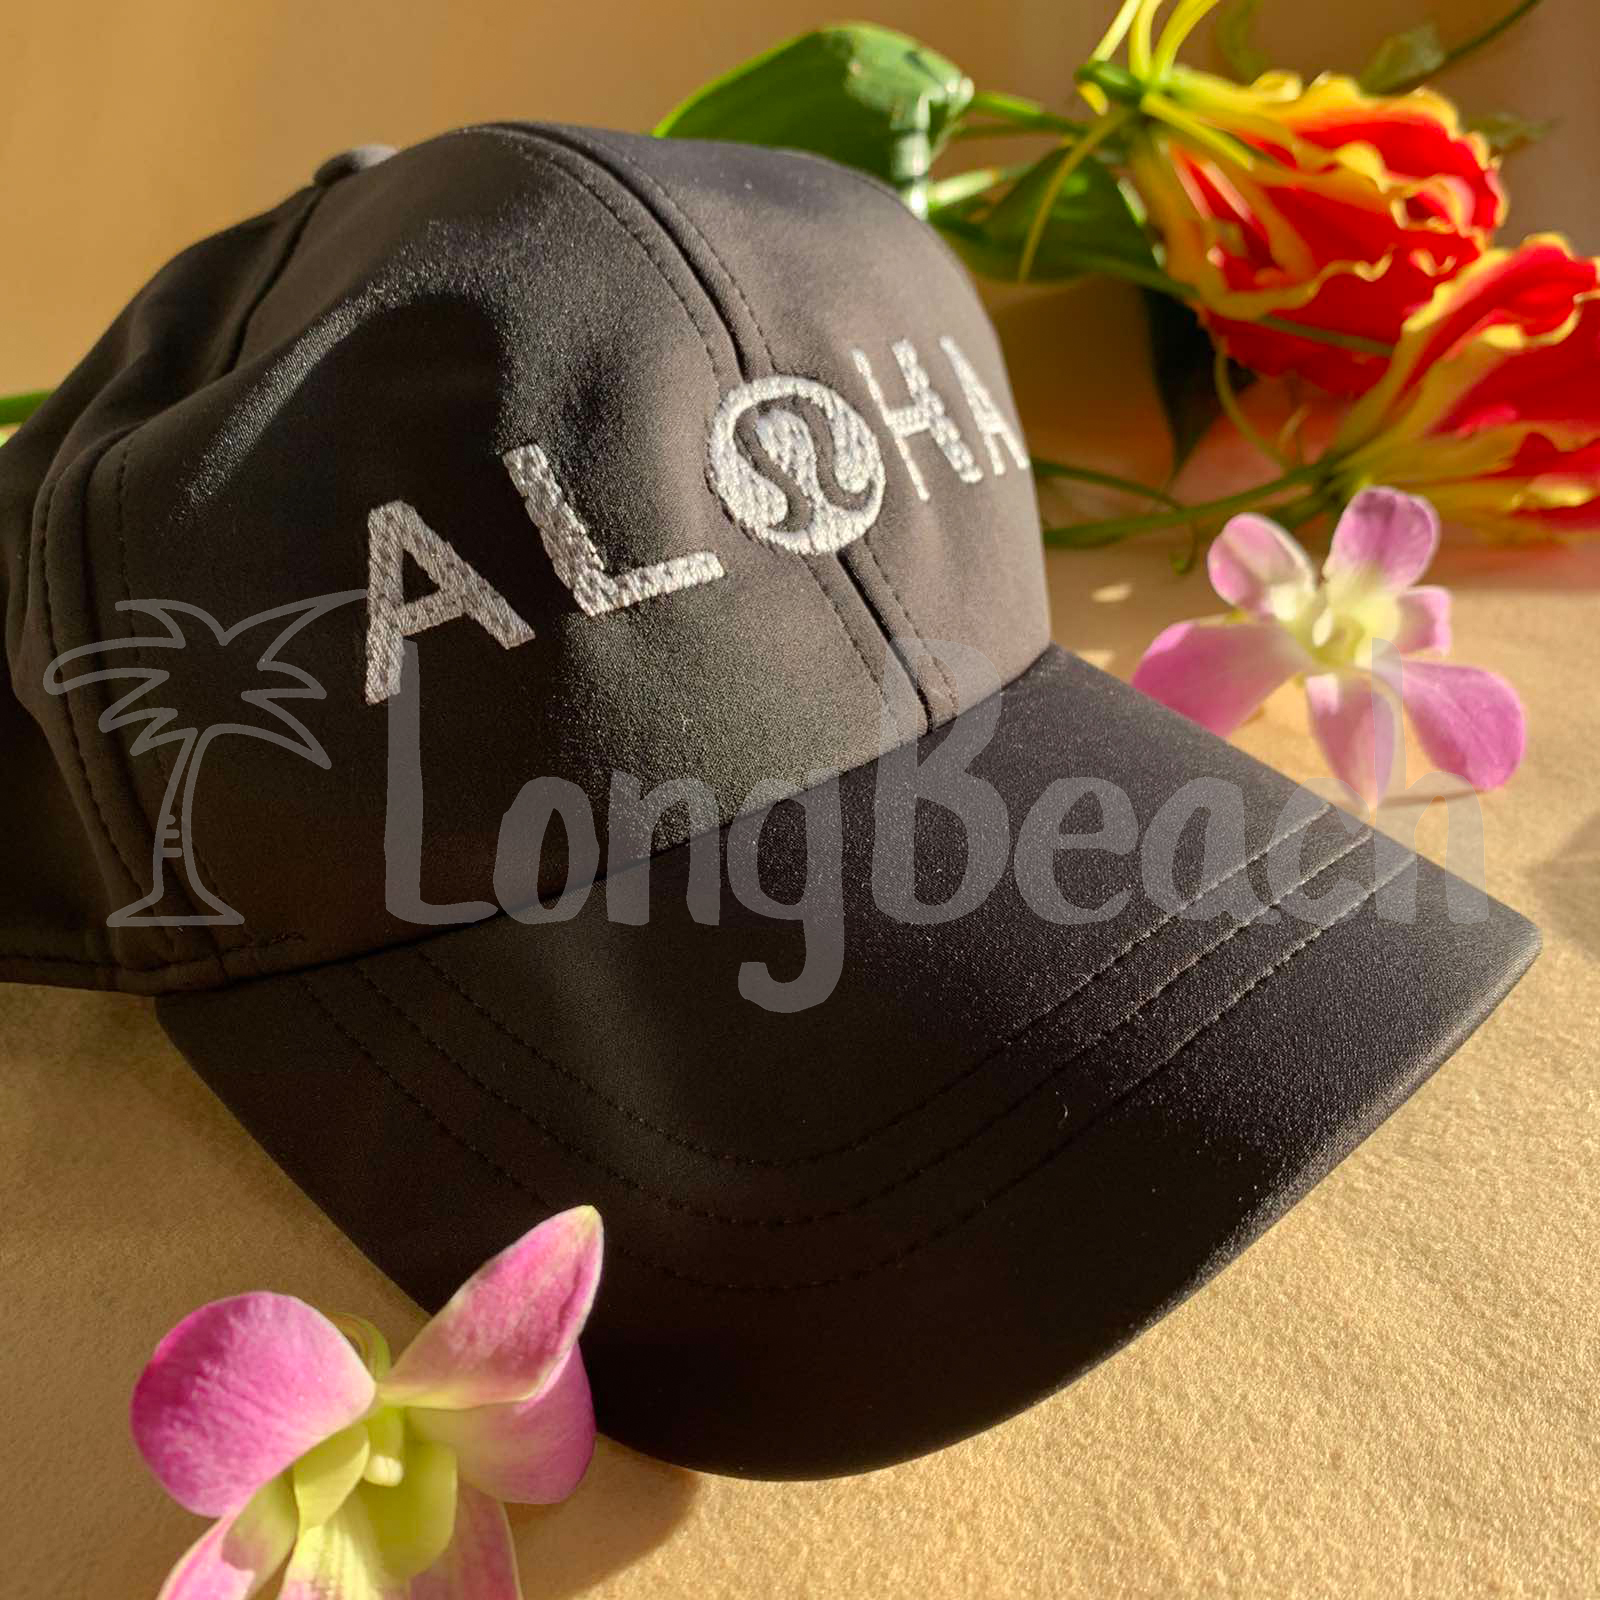 lululemon aloha hat